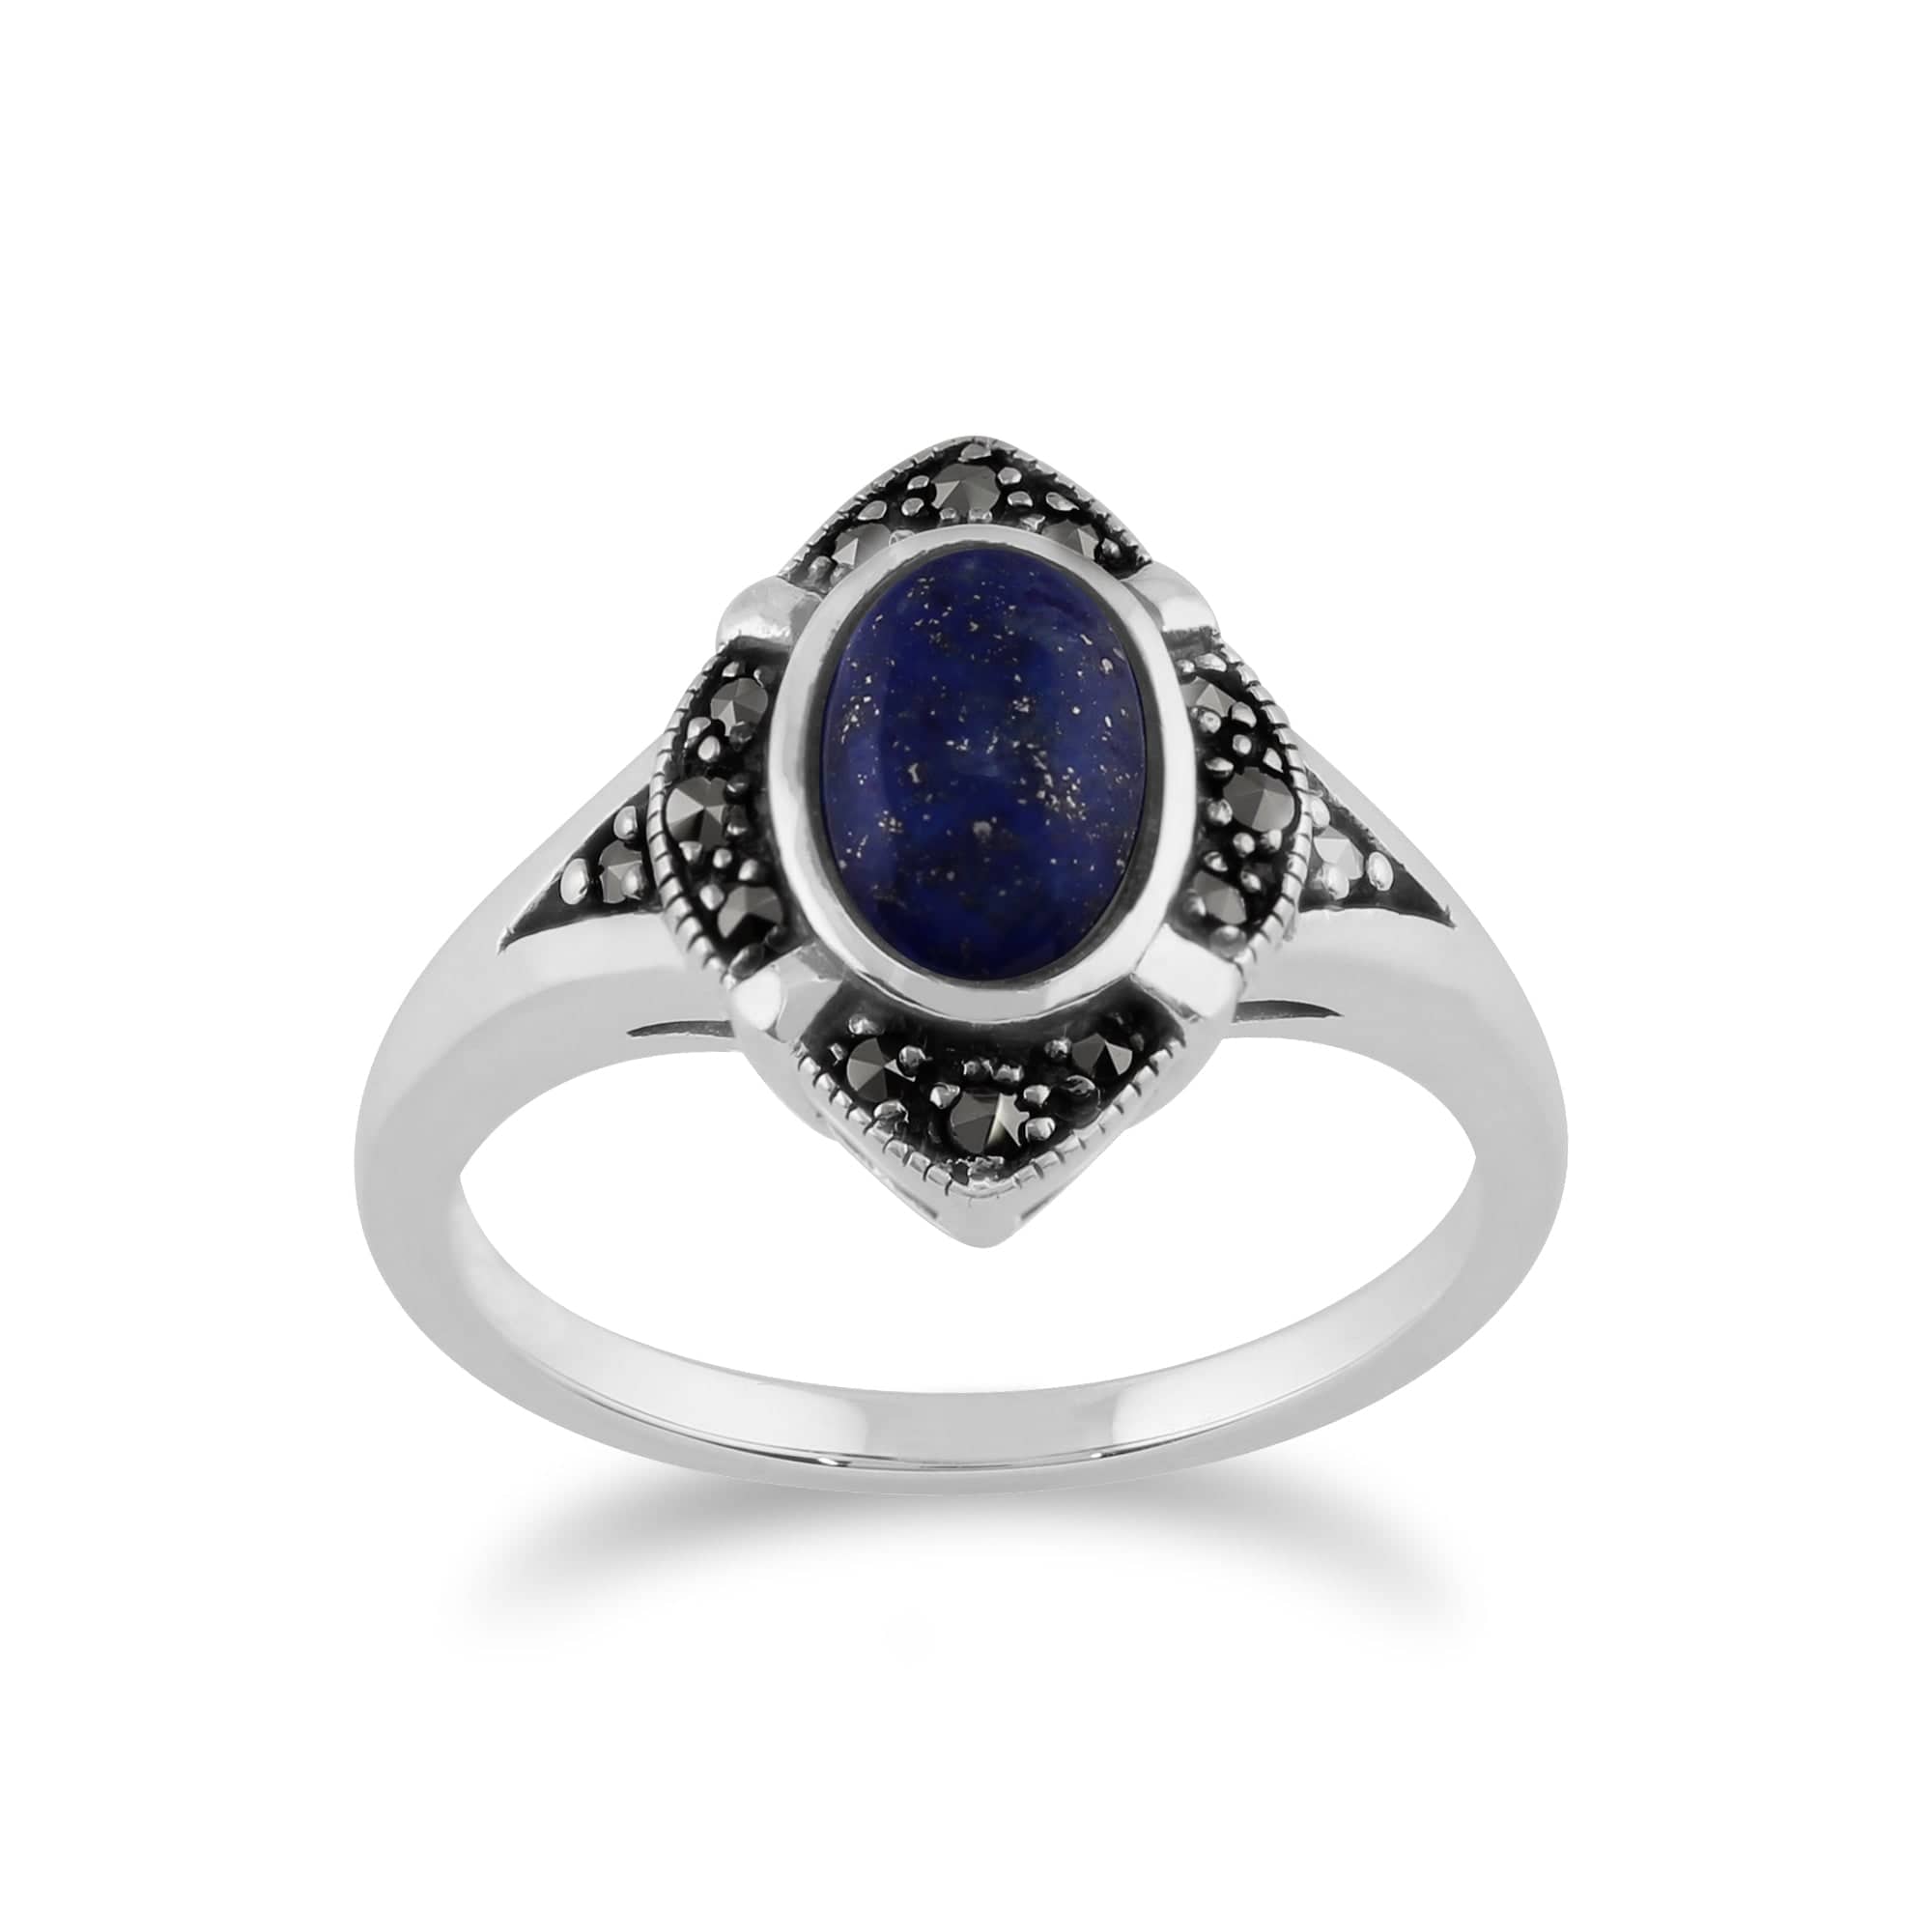 Gemondo 925 Sterling Silver 1.00ct Lapis Lazuli & Marcasite Art Deco Ring Image 1